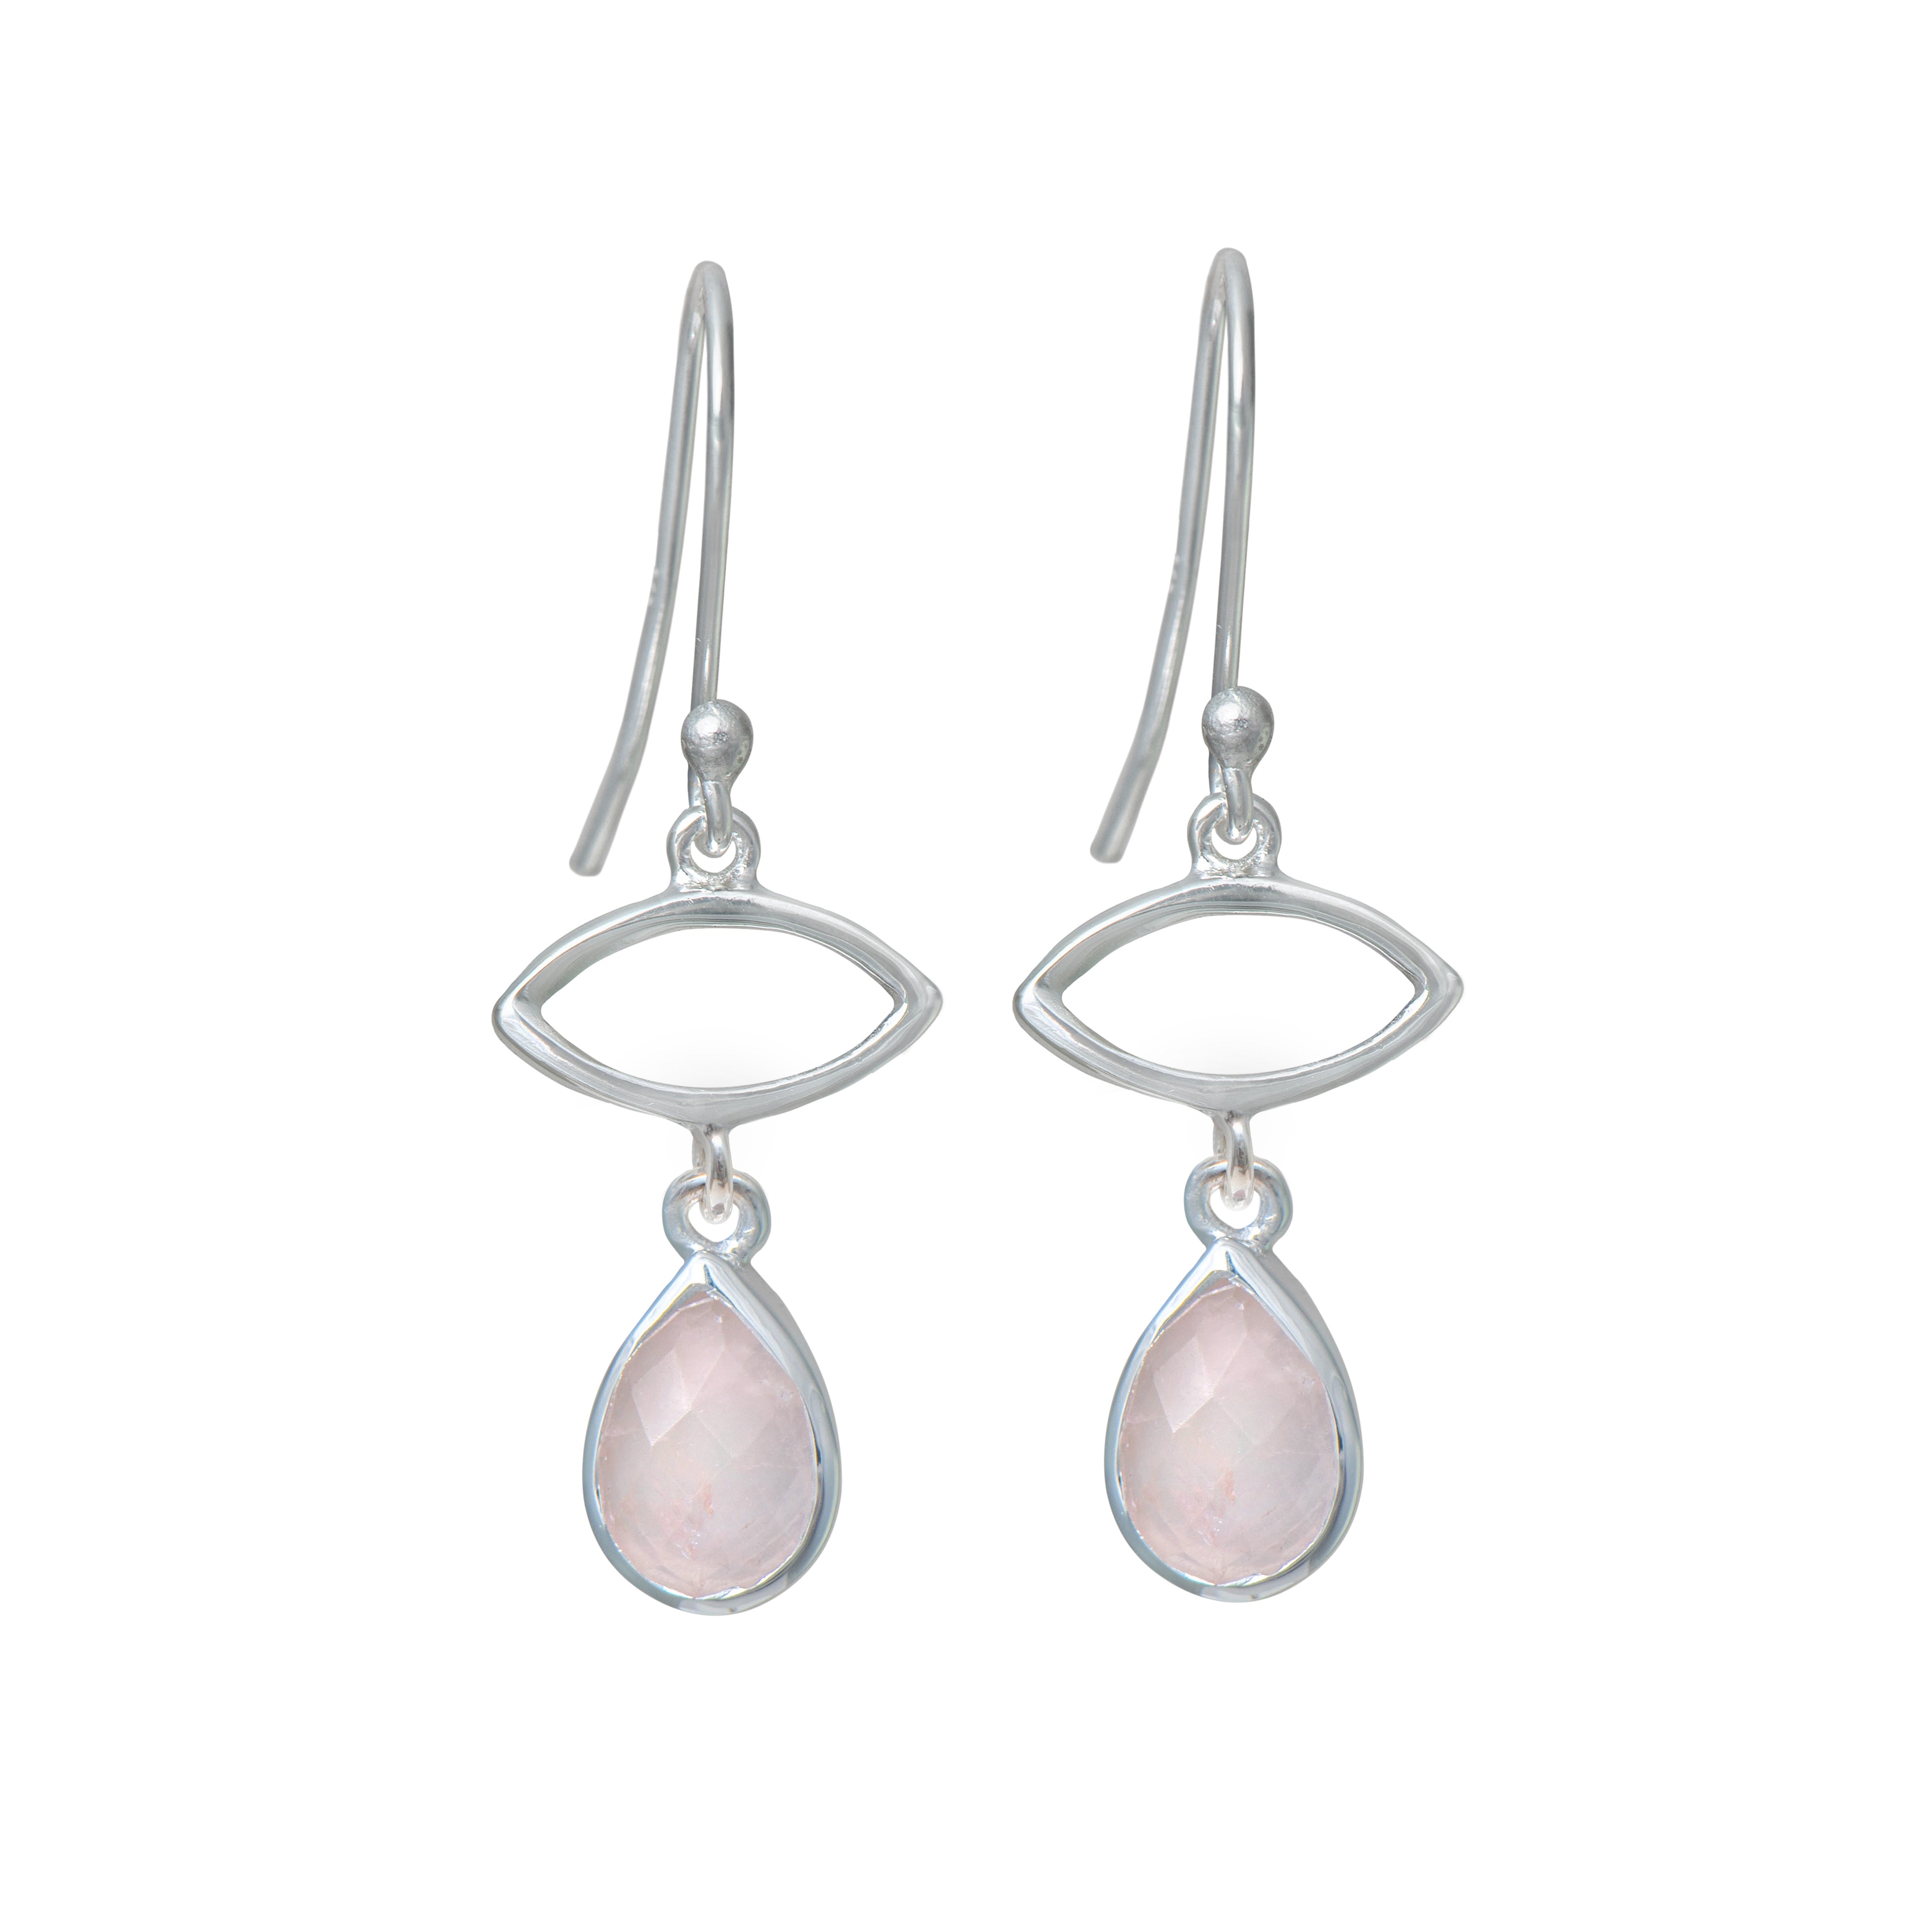 Silver Drop Earrings with Rose Quartz Gemstone